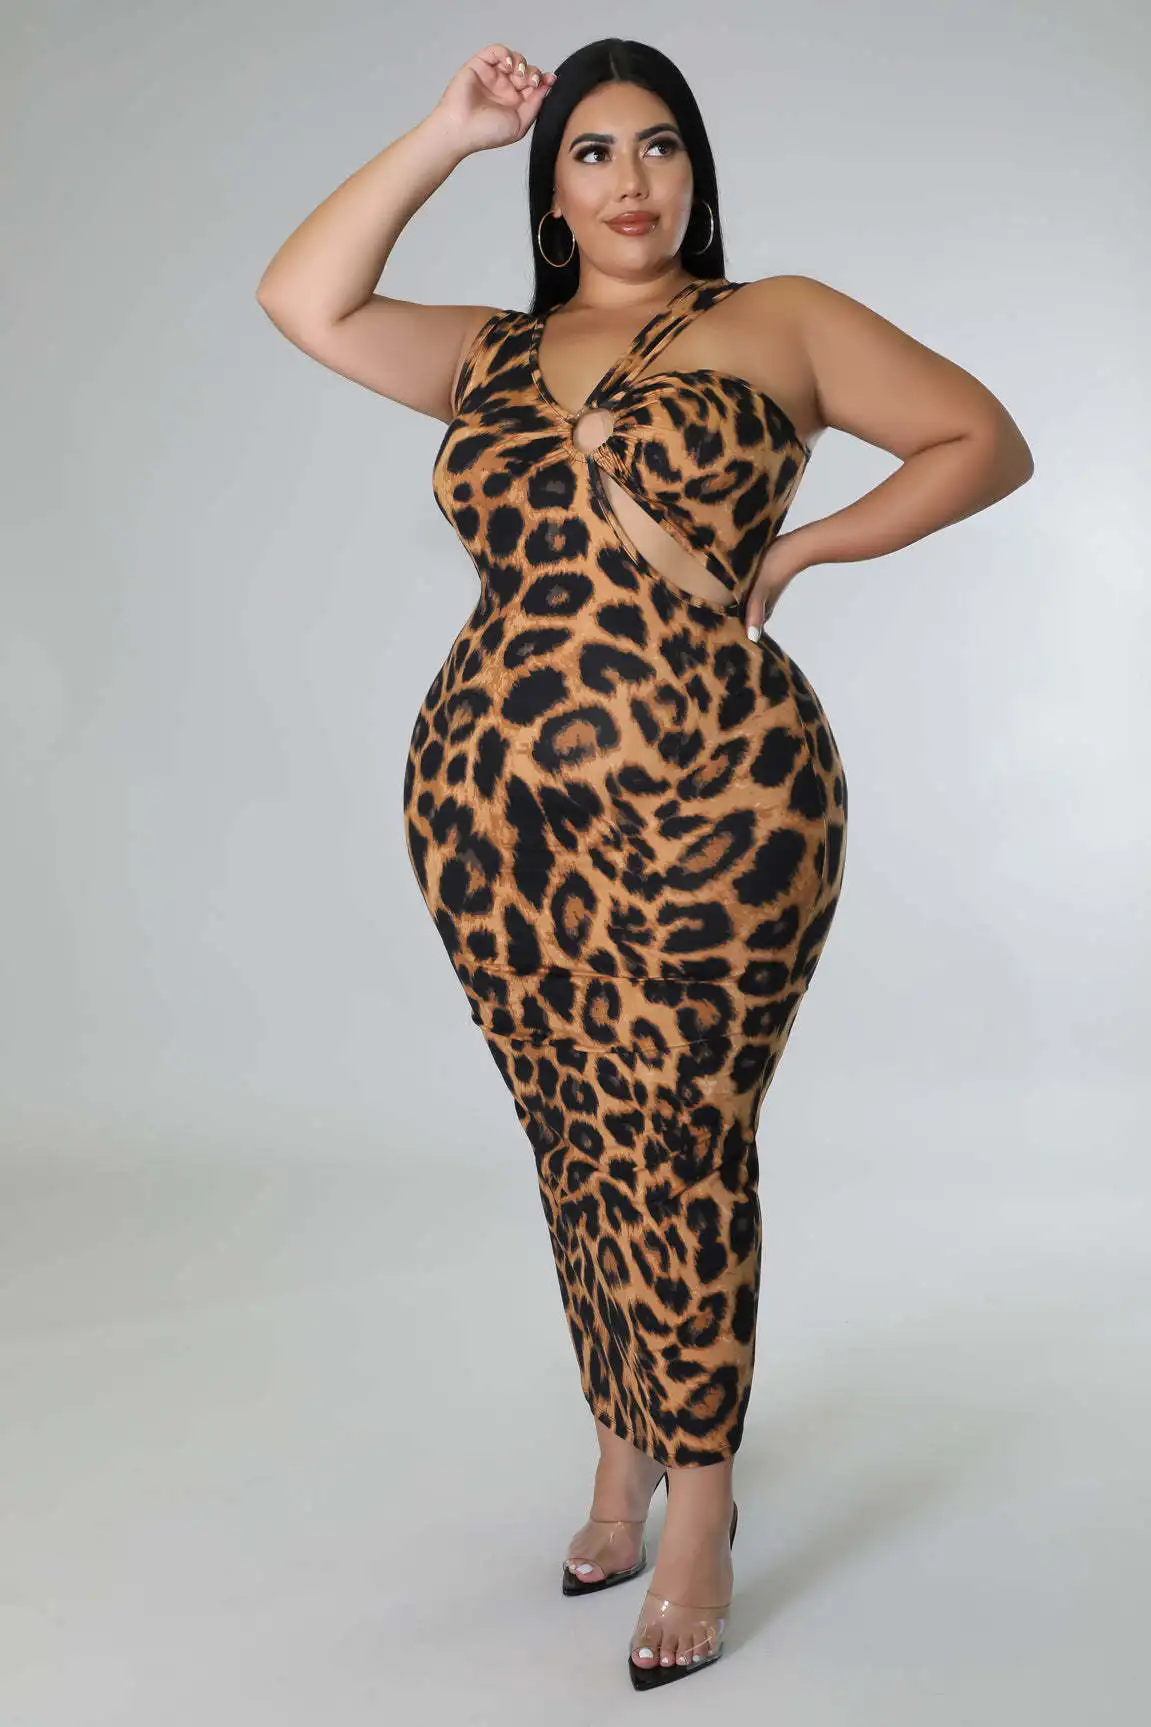 Bh669 Xl To 5xl Printed Leopard Plus Size Stretchy Dress - Buy Leopard ...